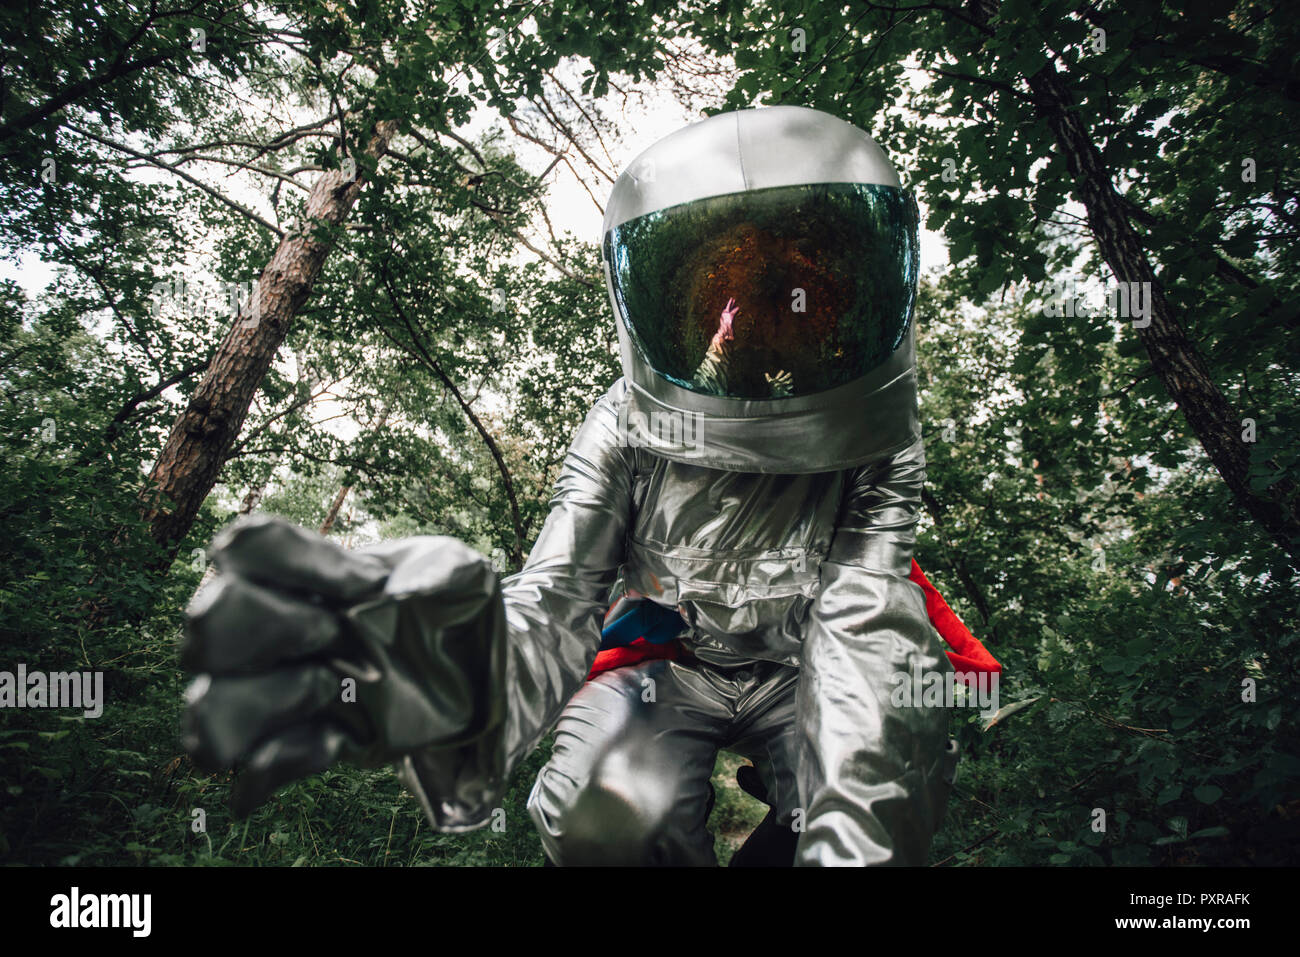 Spaceman explorer la nature, examining plants in forest Banque D'Images